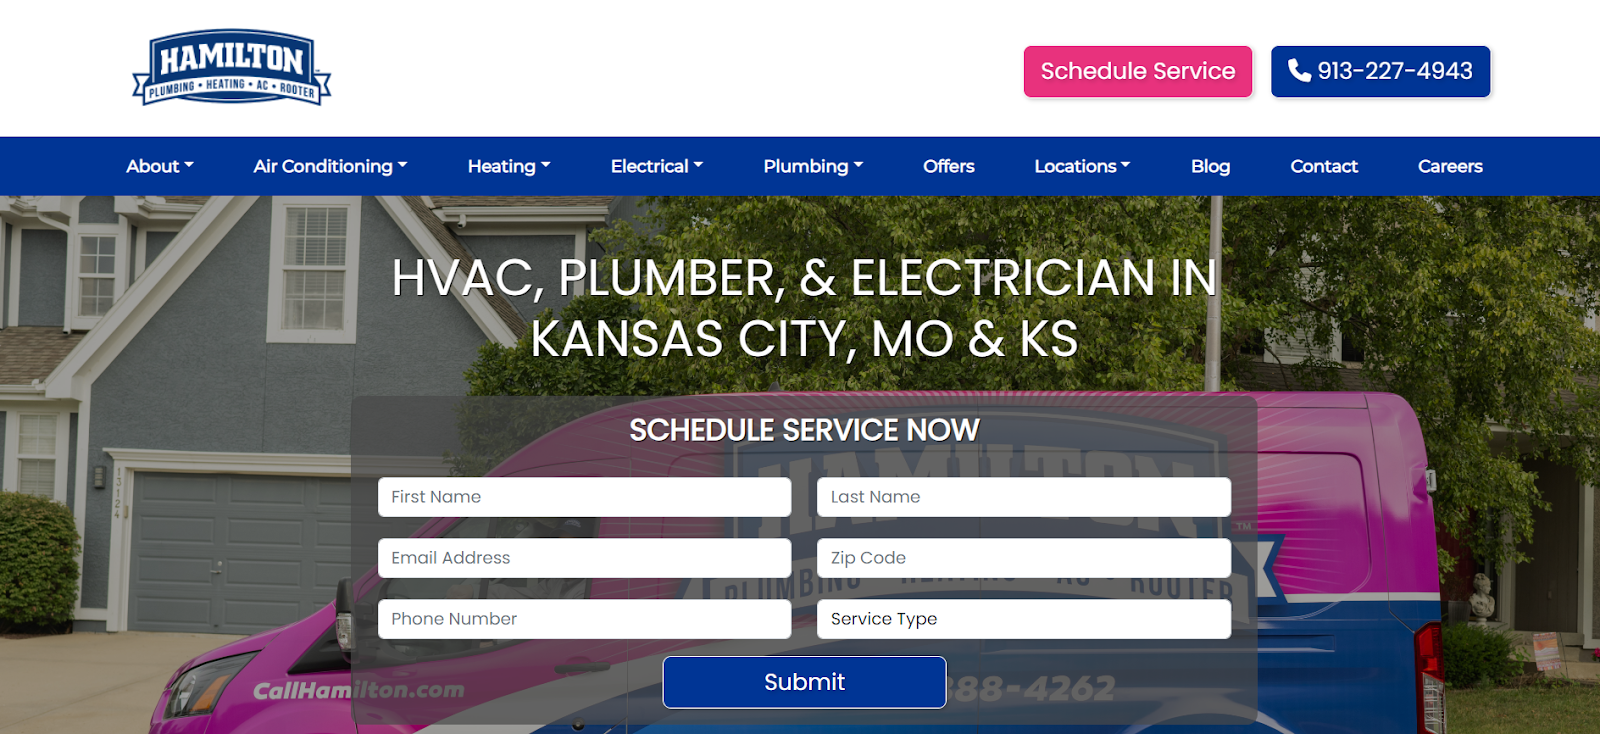 HVAC website example: Hamilton